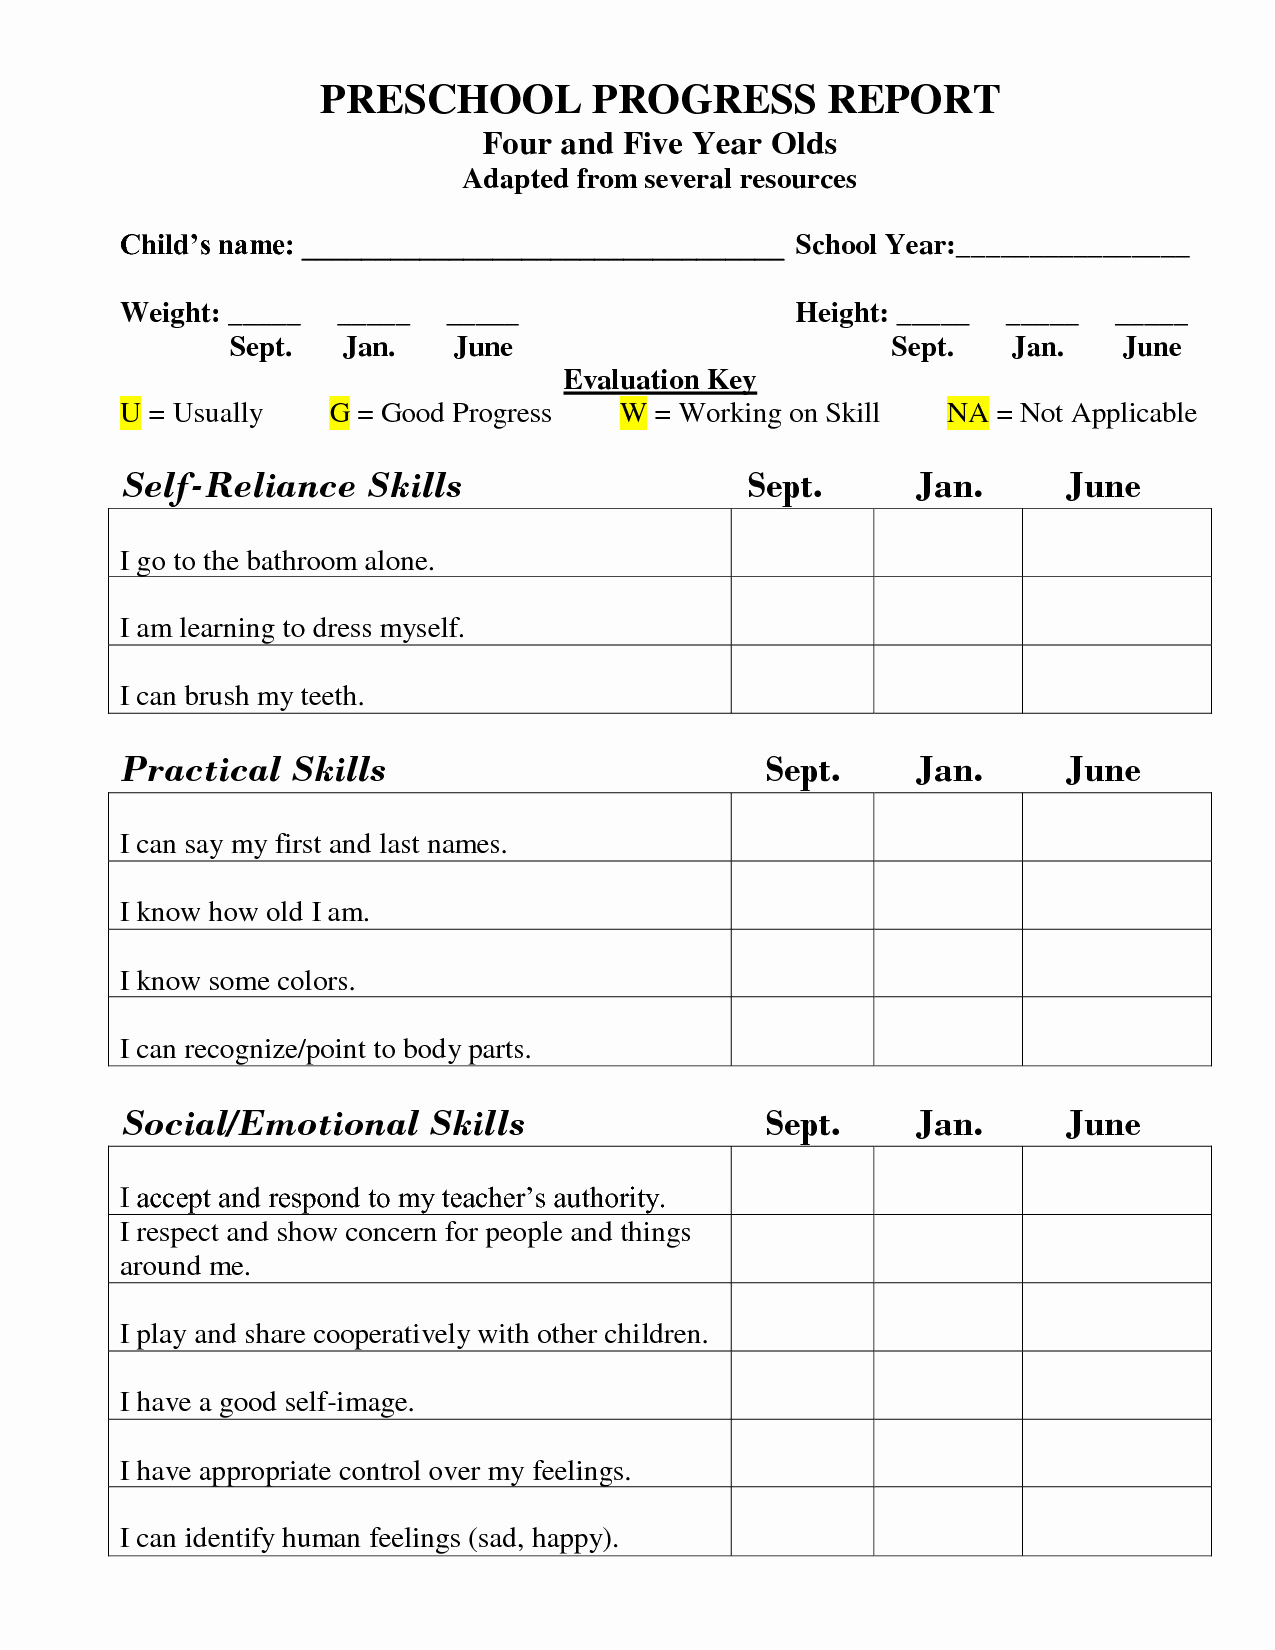 Kindergarten Report Card Template Awesome Nursery Daily forms Preschool Progress Report Doc Child Preschool Pinterest